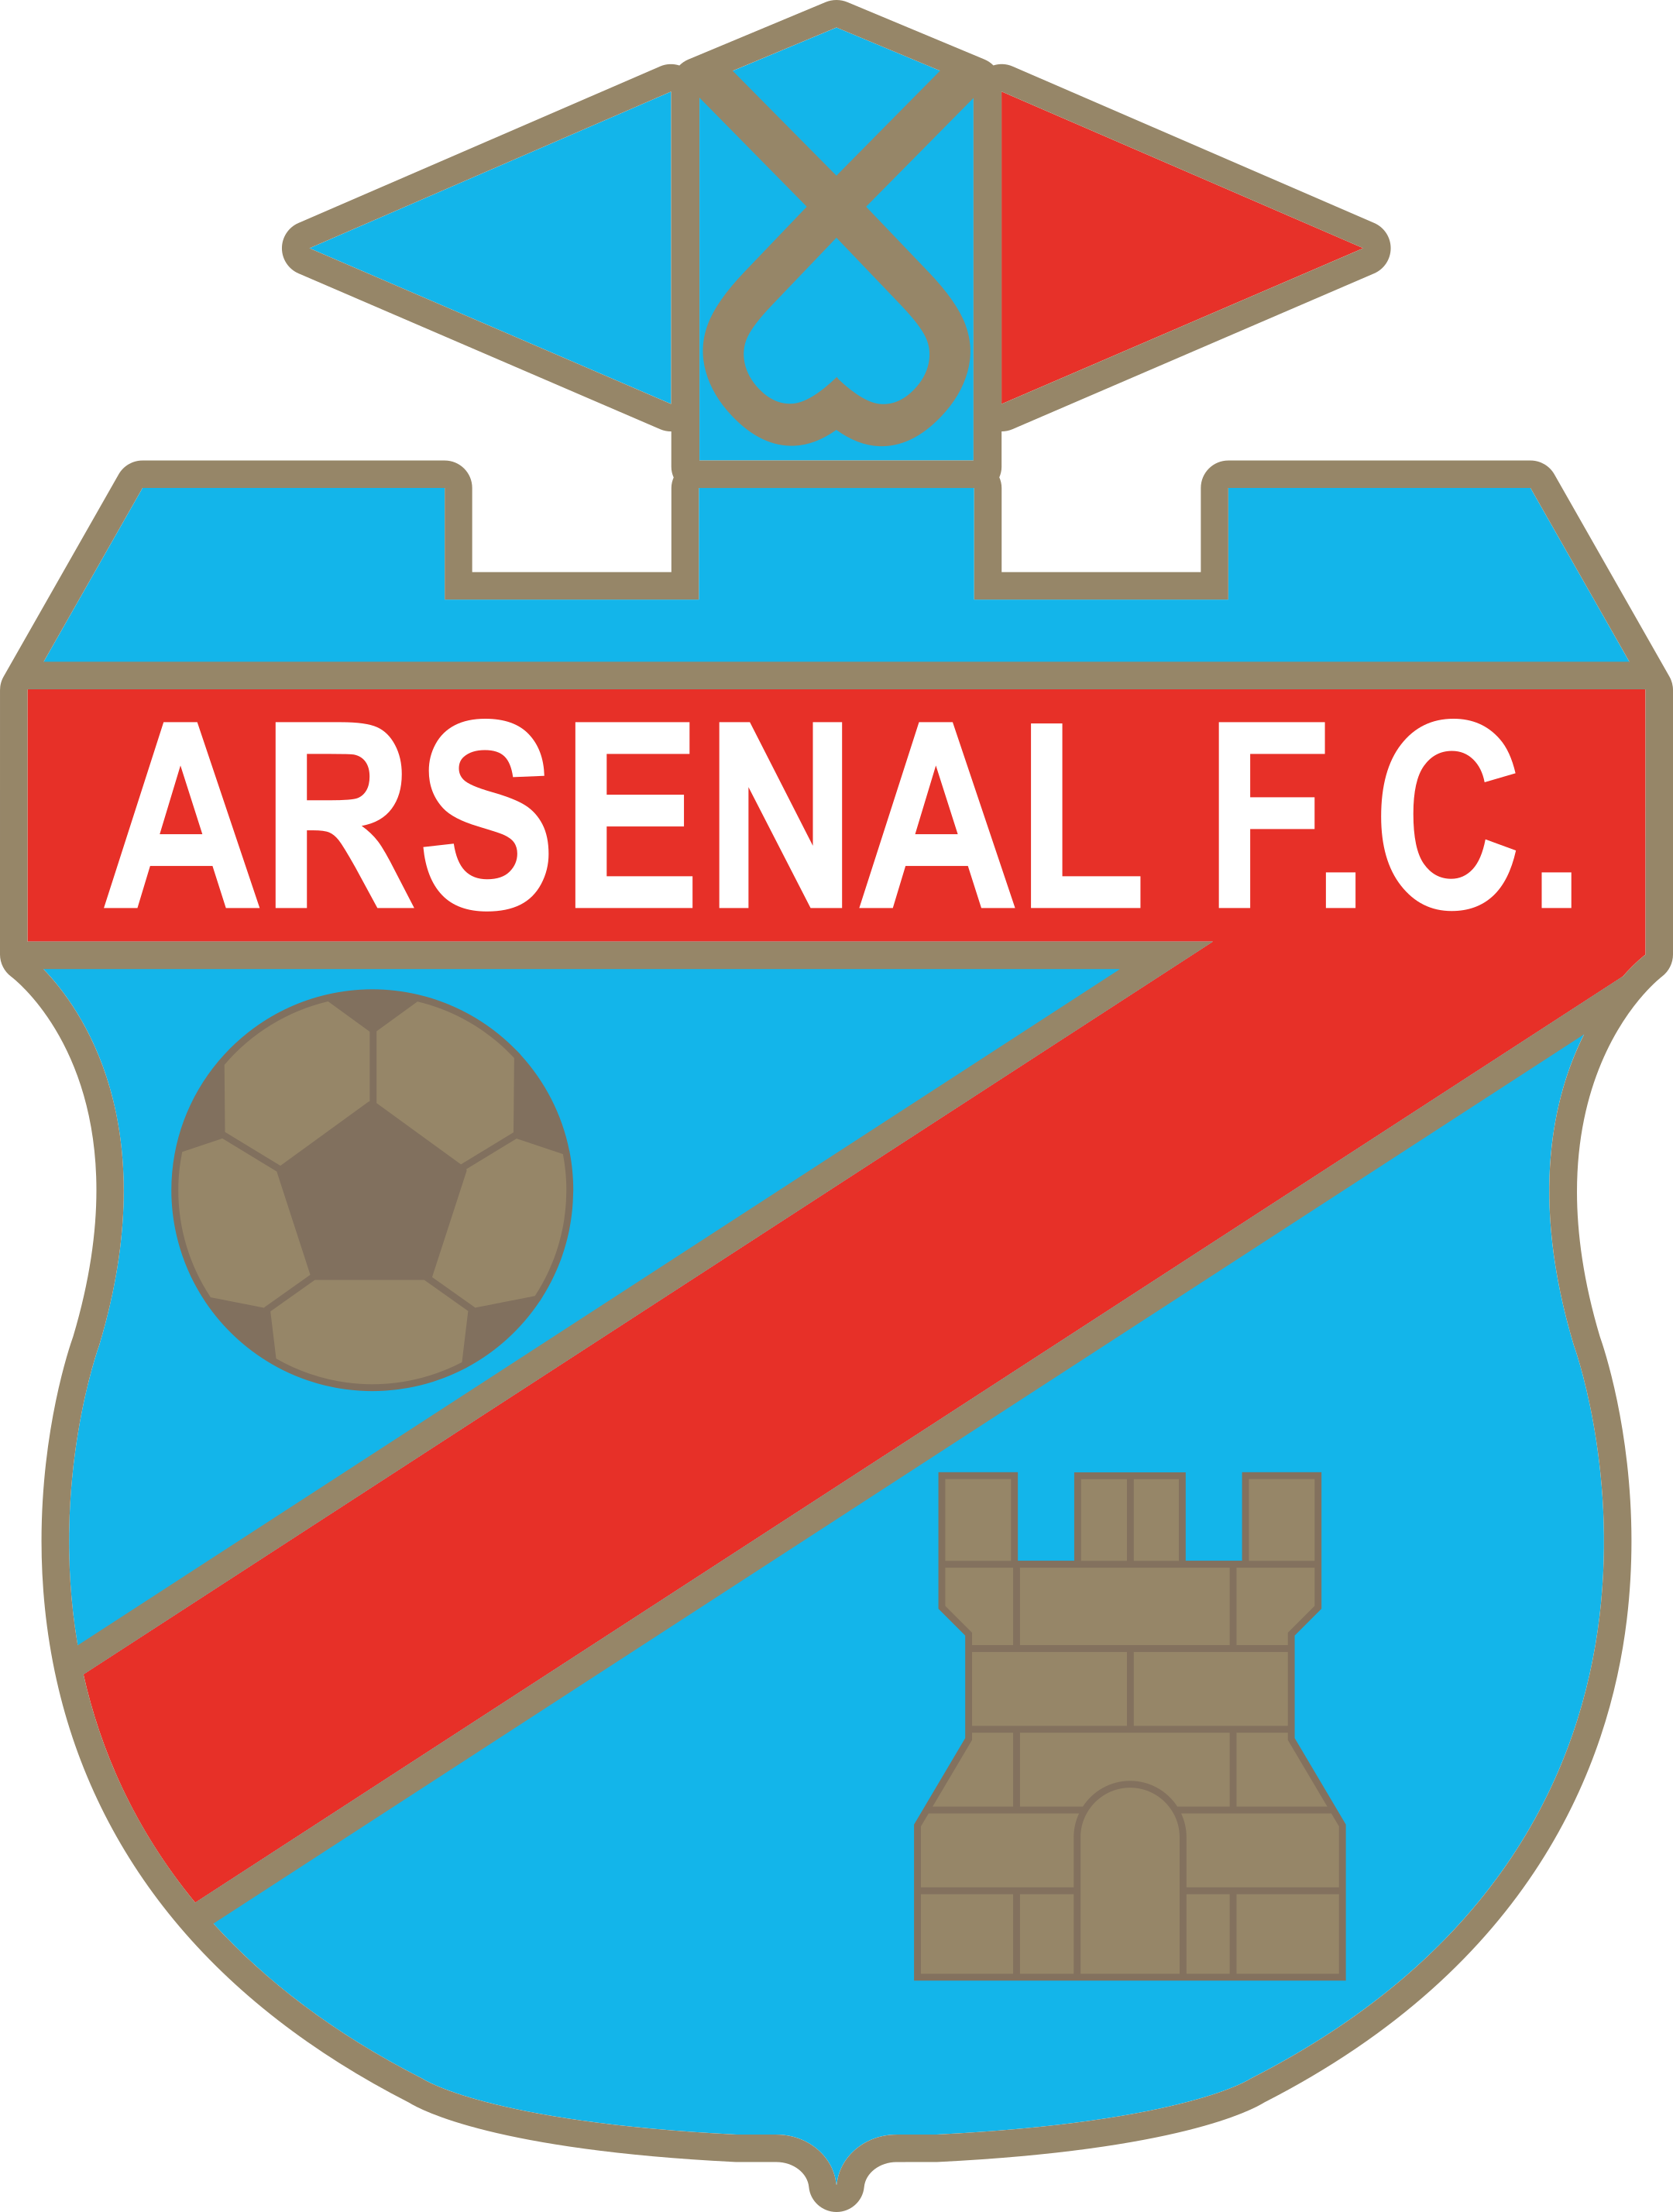 arsenal fc logo 1 - Arsenal FC Sarandí Logo